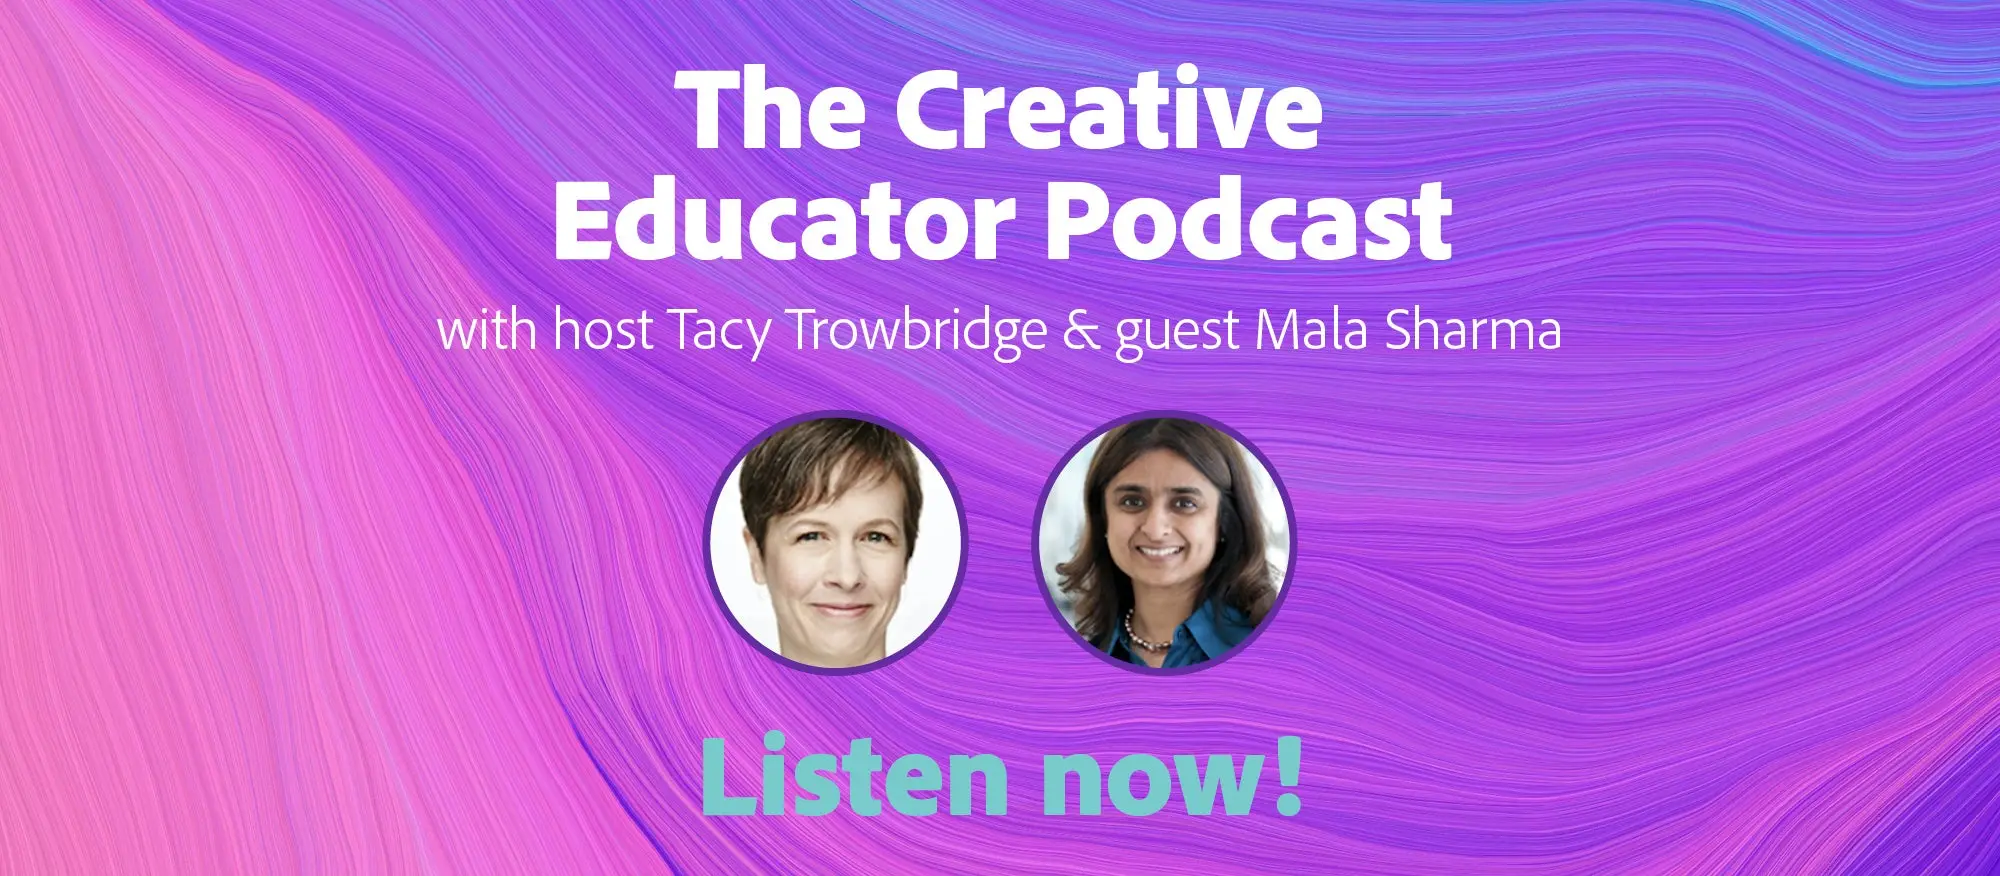 The Creative Educator Podcast. 